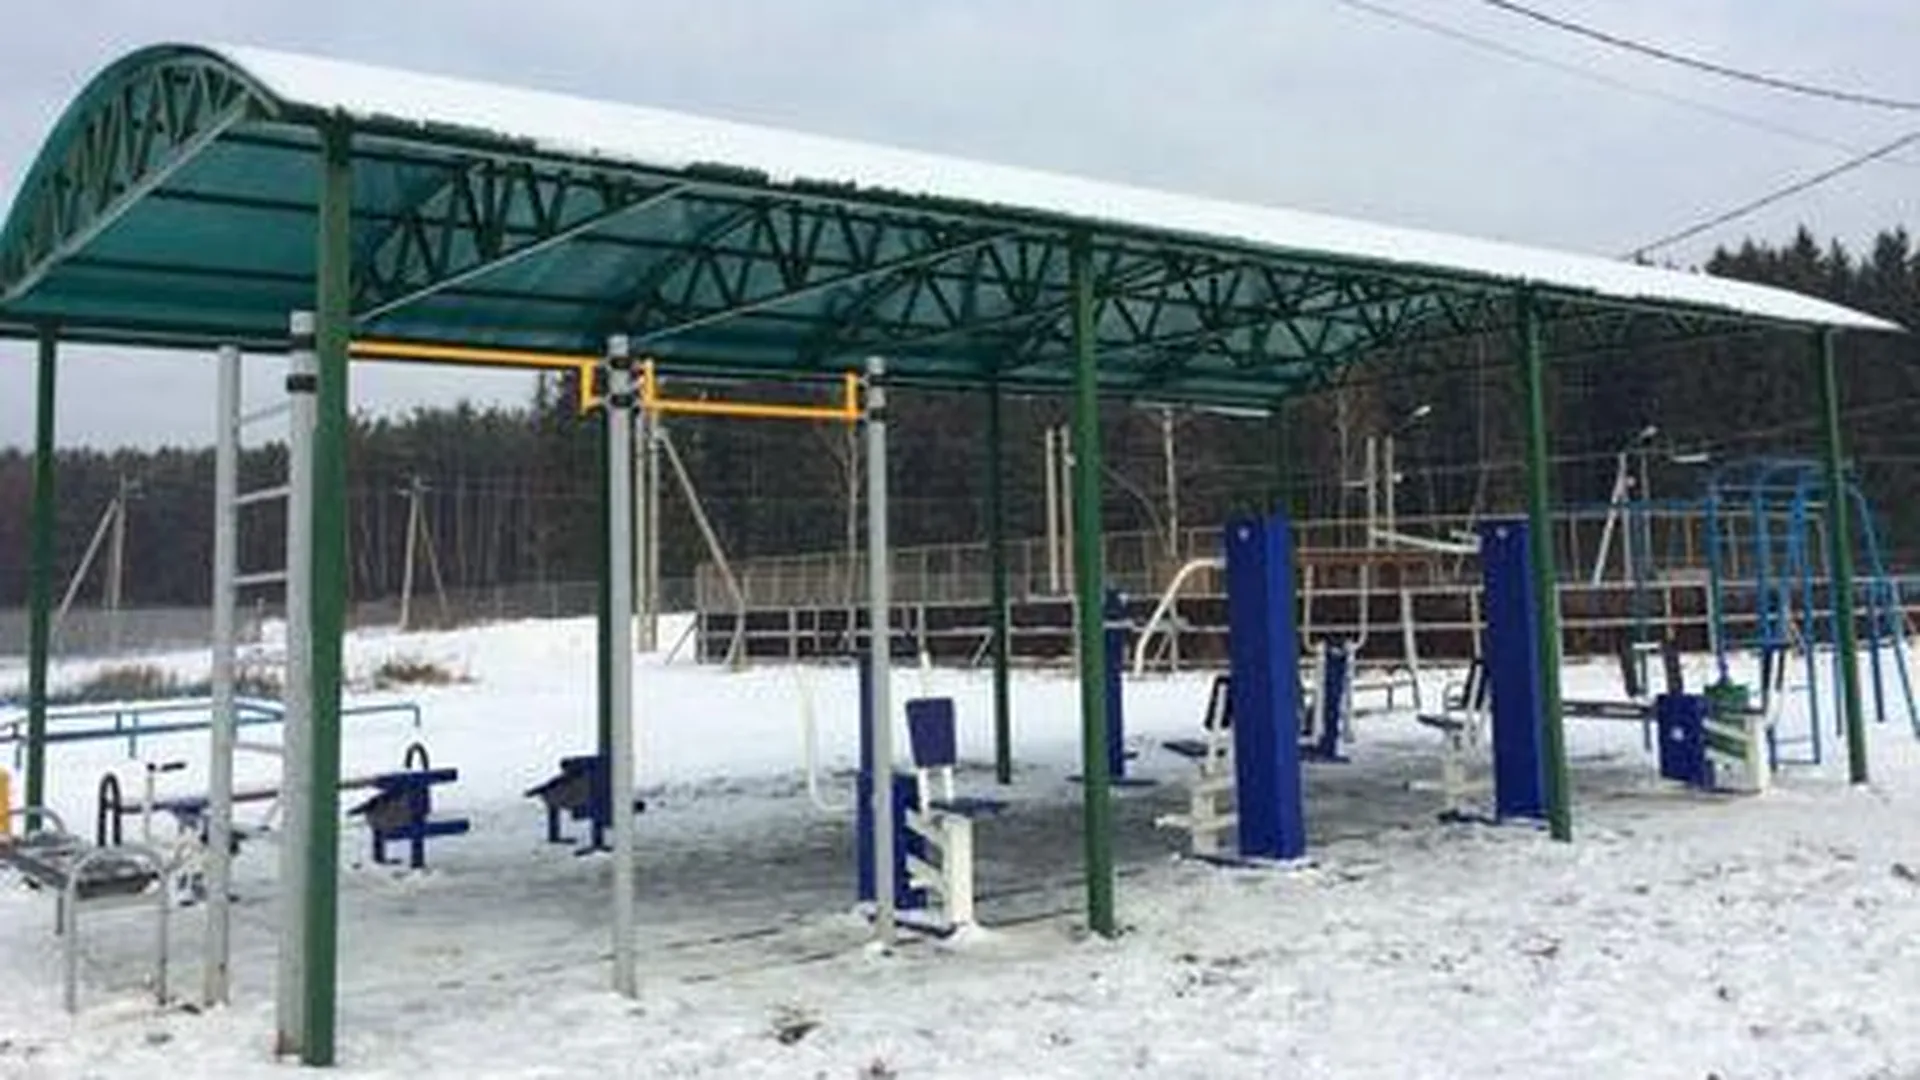 Площадка с тренажерами появилась на стадионе в поселке Лунево